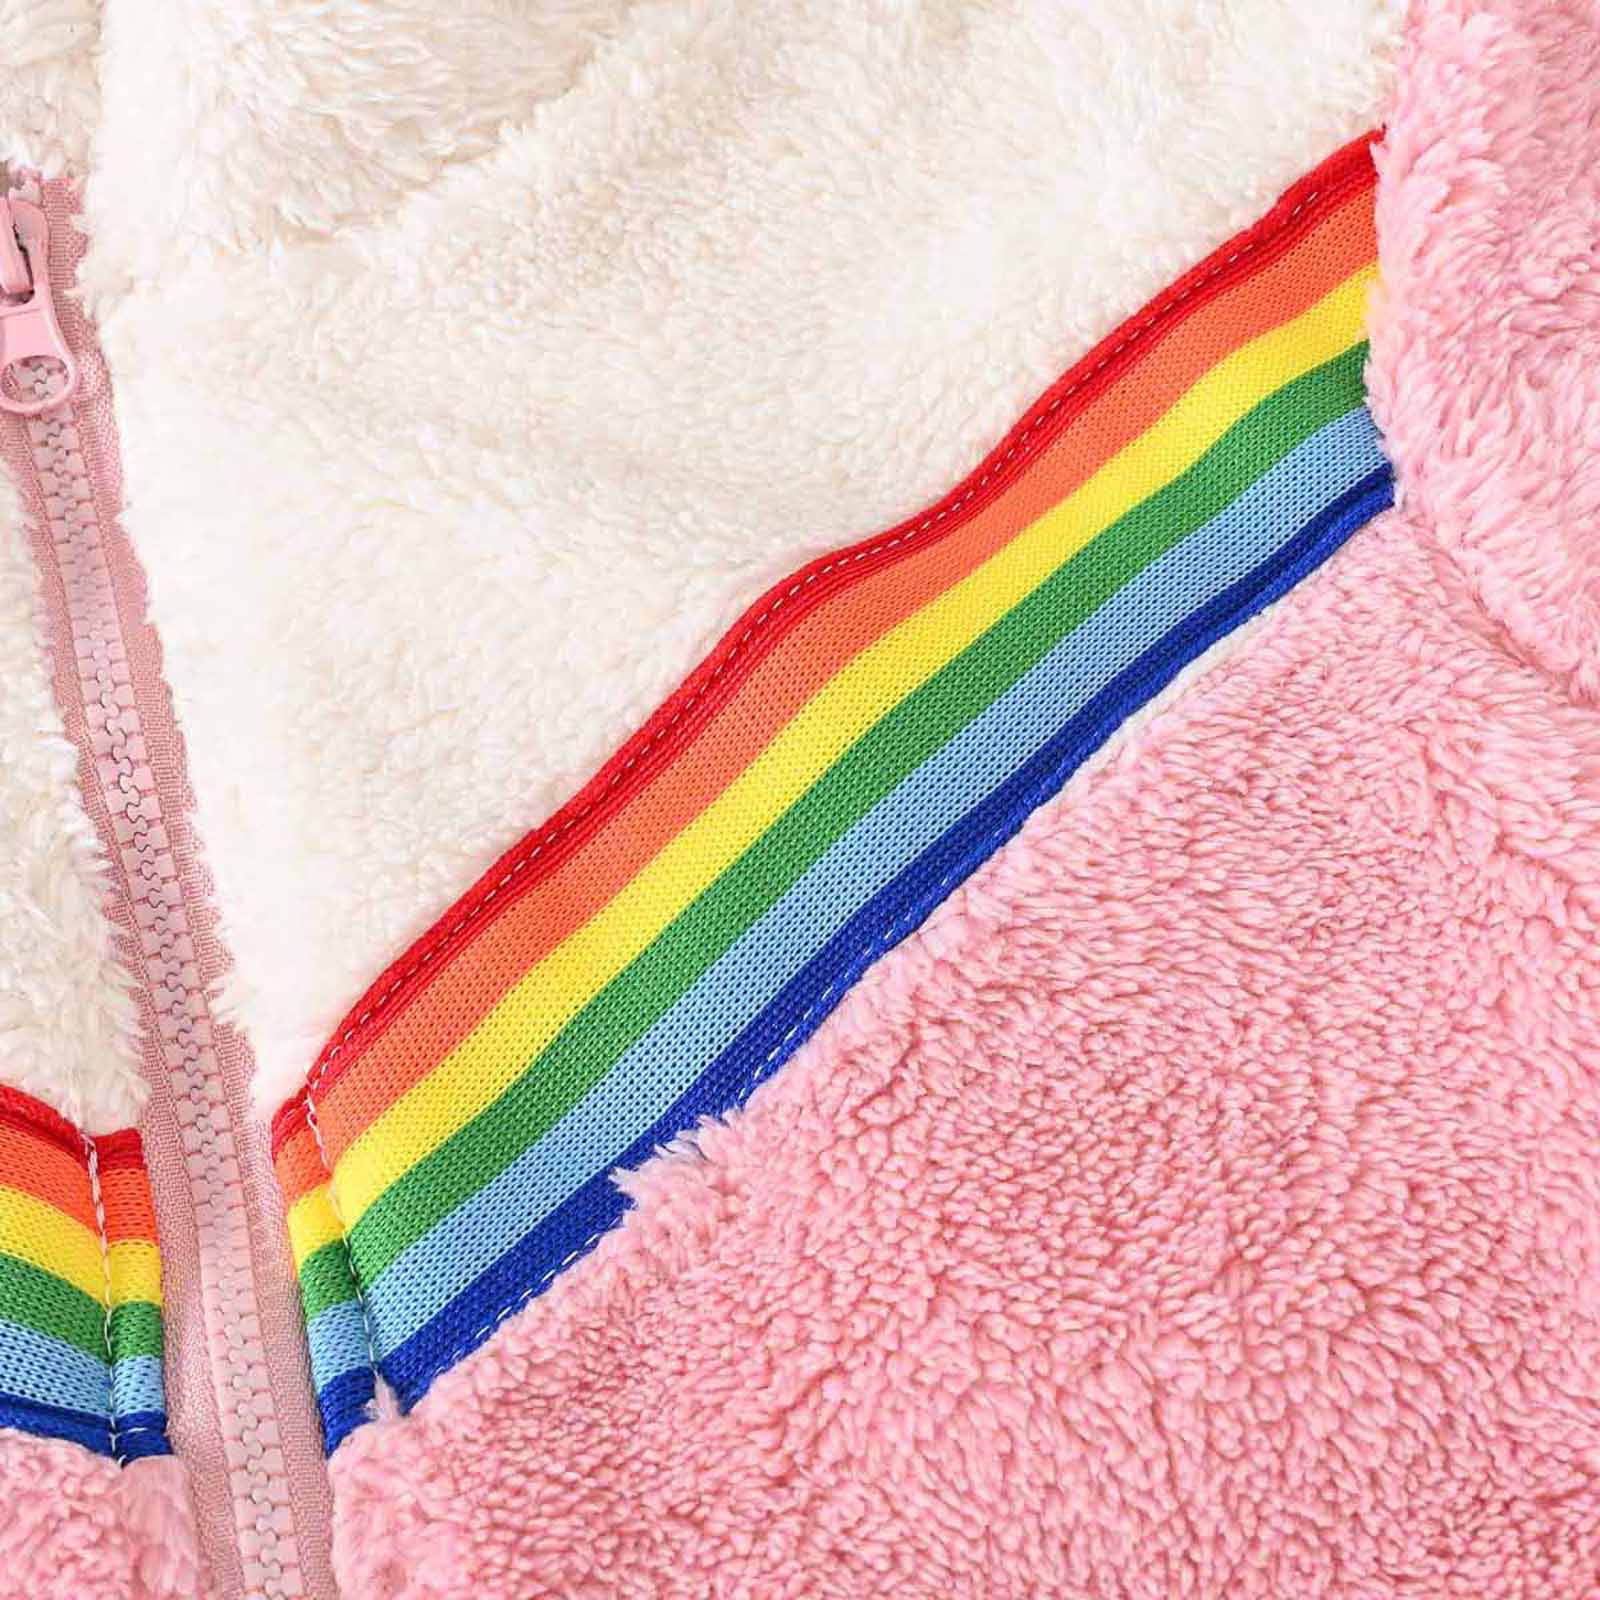 YYDGH Girls Zipper Jacket Fuzzy Sweatshirt Long Sleeve Casual Cozy Fleece Sherpa Outwear Coat Full-Zip Rainbow Jackets(Pink,2-3 Years) - image 3 of 8